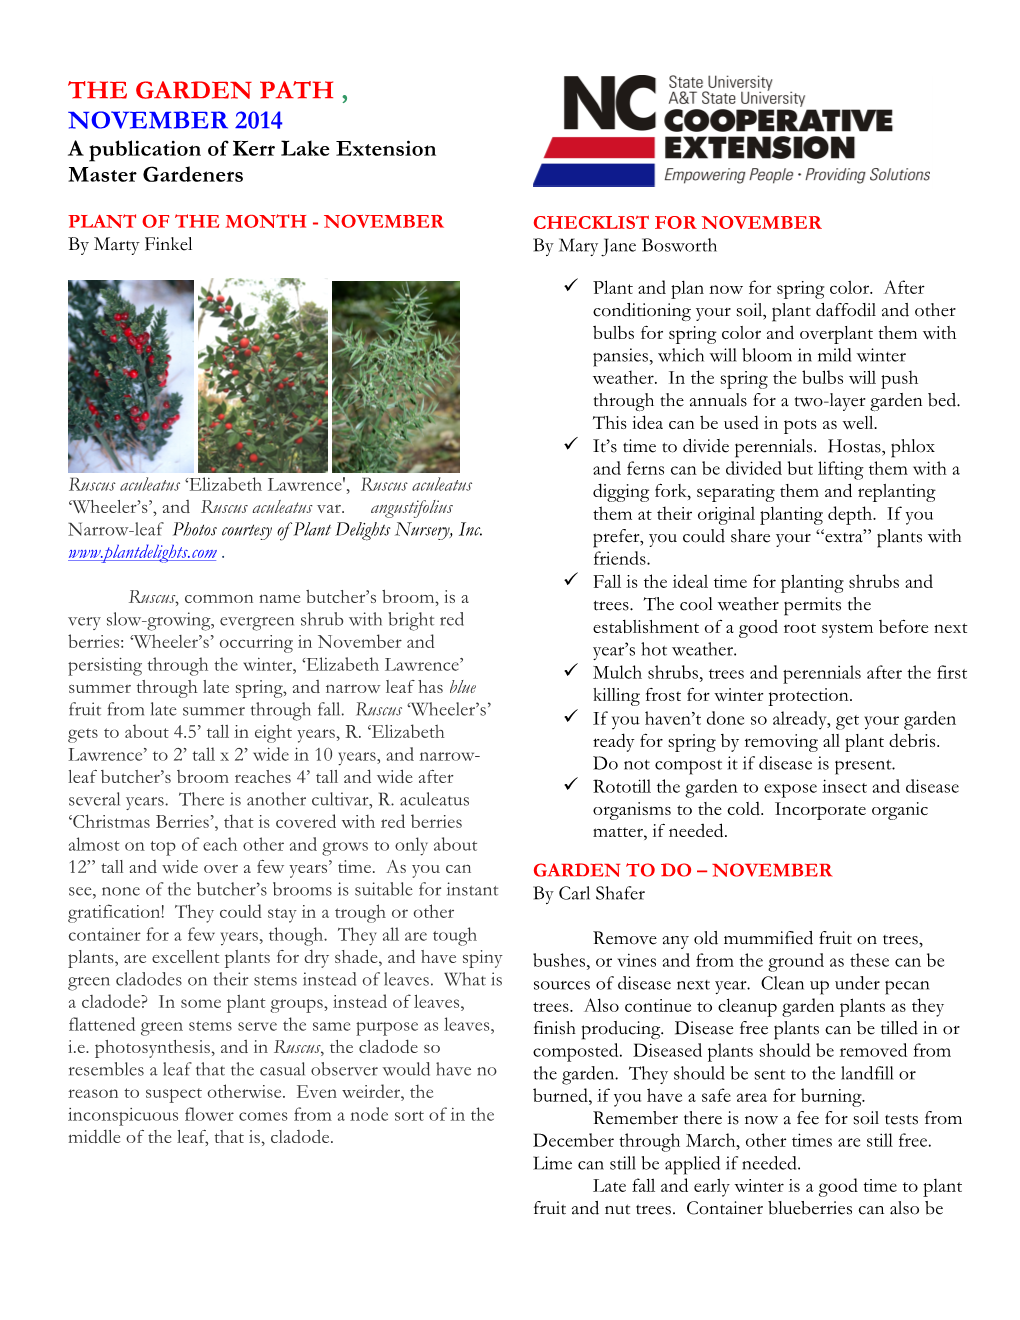 NOVEMBER 2014 a Publication of Kerr Lake Extension Master Gardeners